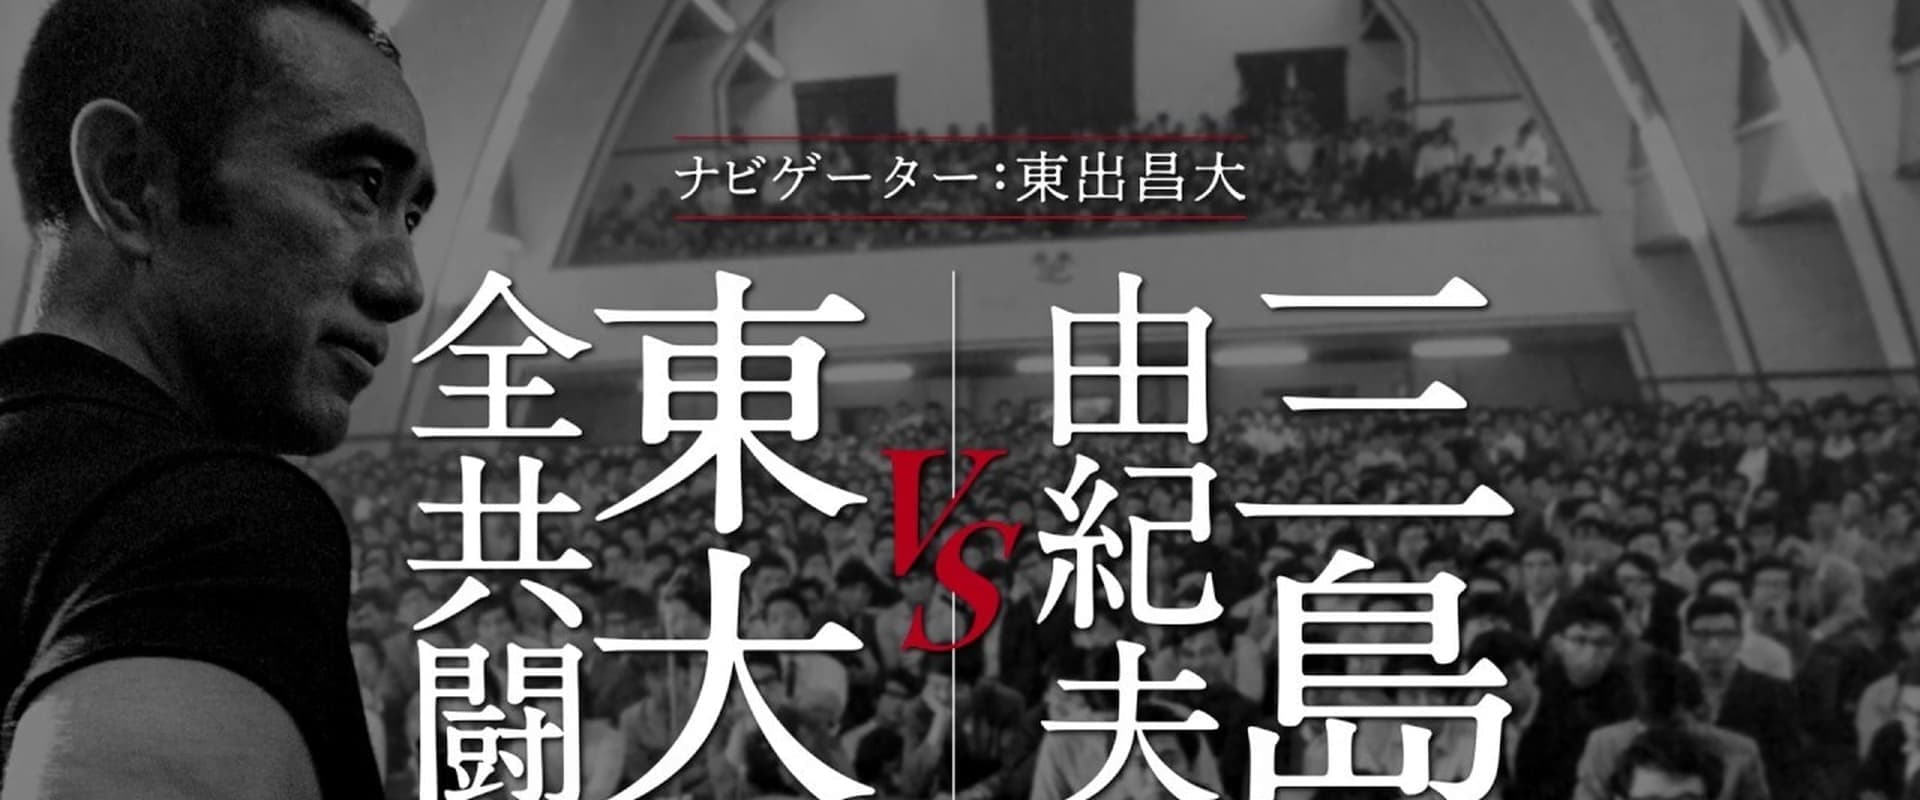 Mishima: The Last Debate